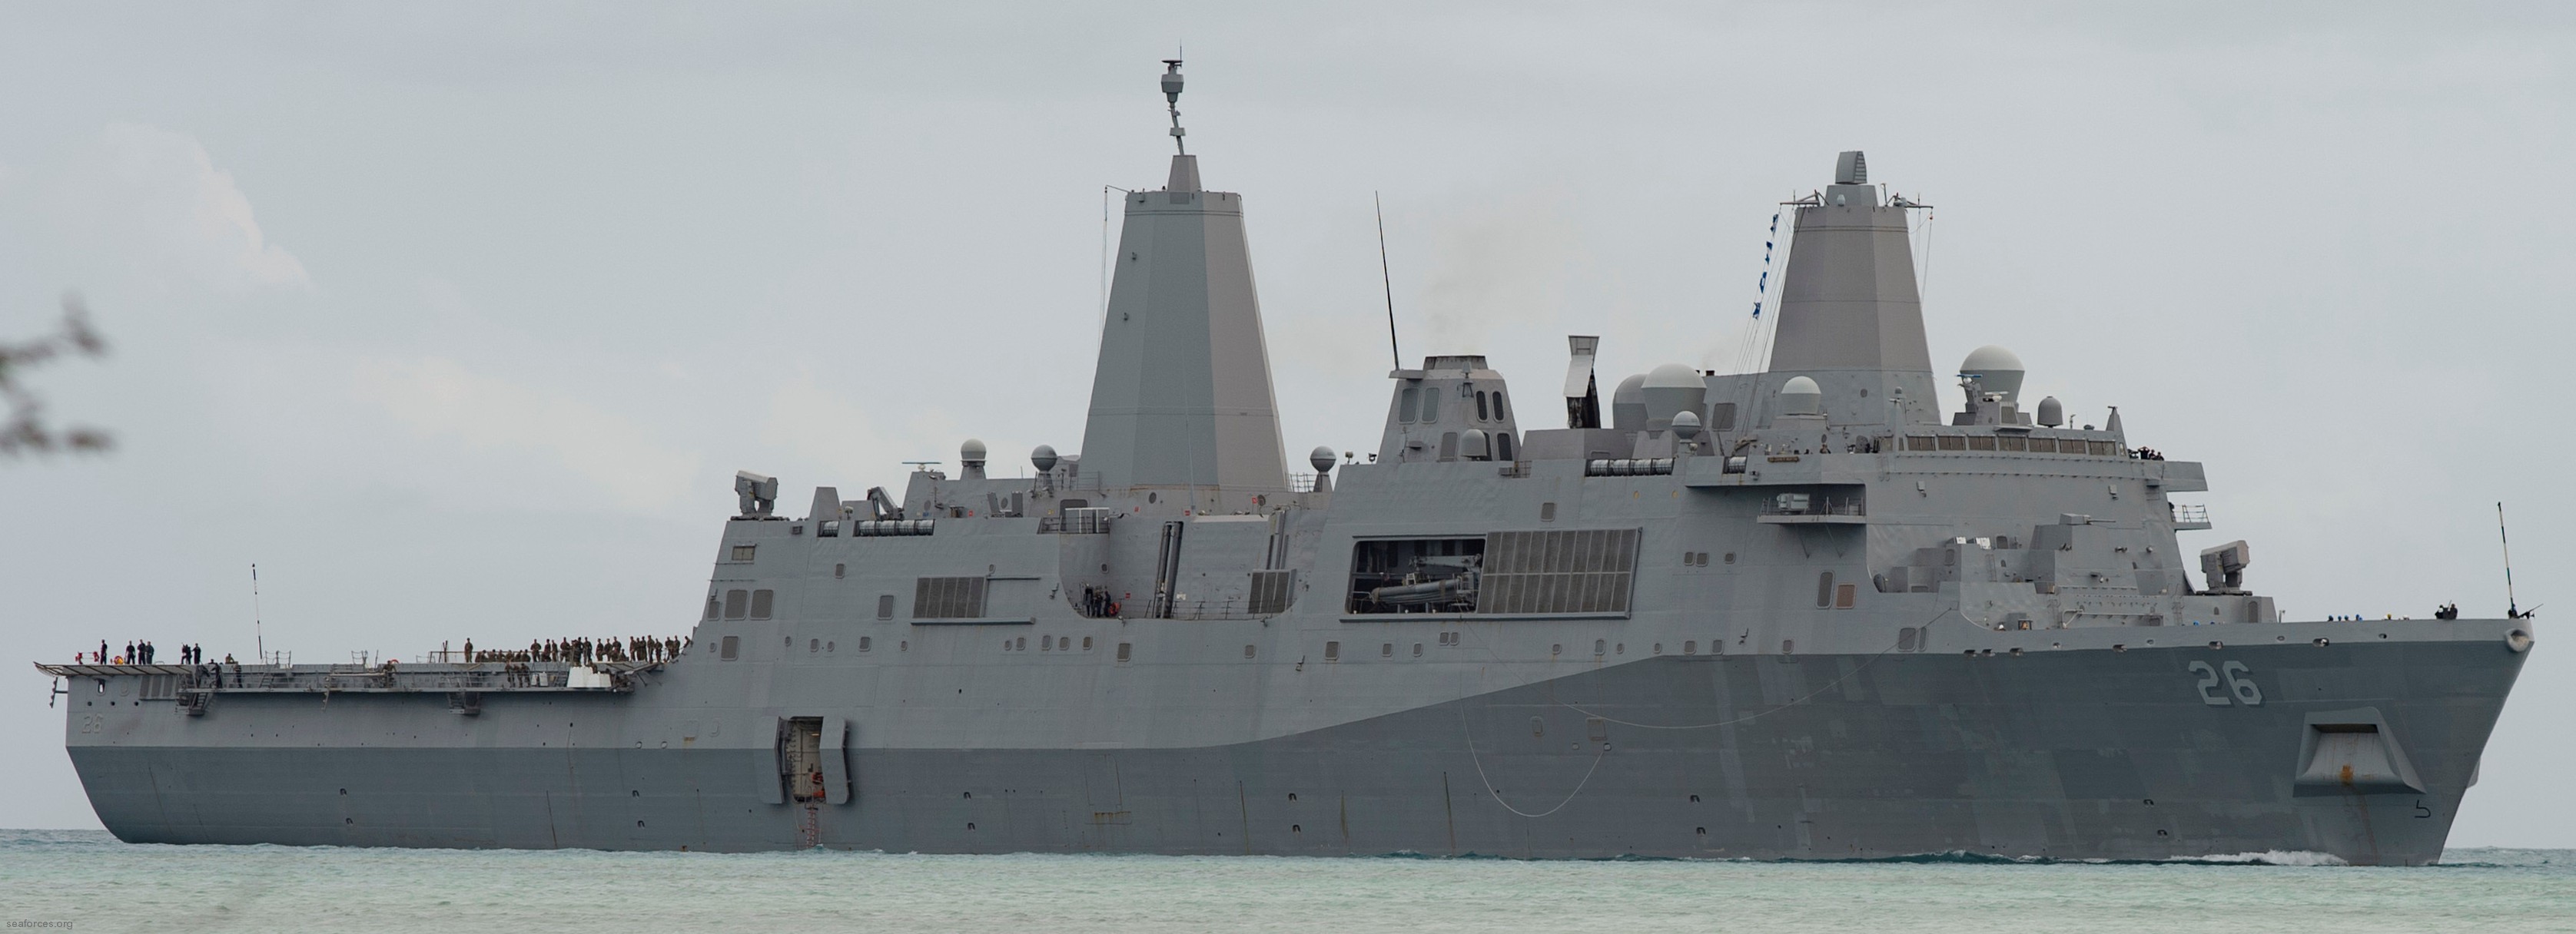 lpd-26 uss john p. murtha san antonio class amphibious transport dock ship navy 11 pearl harbor hawaii